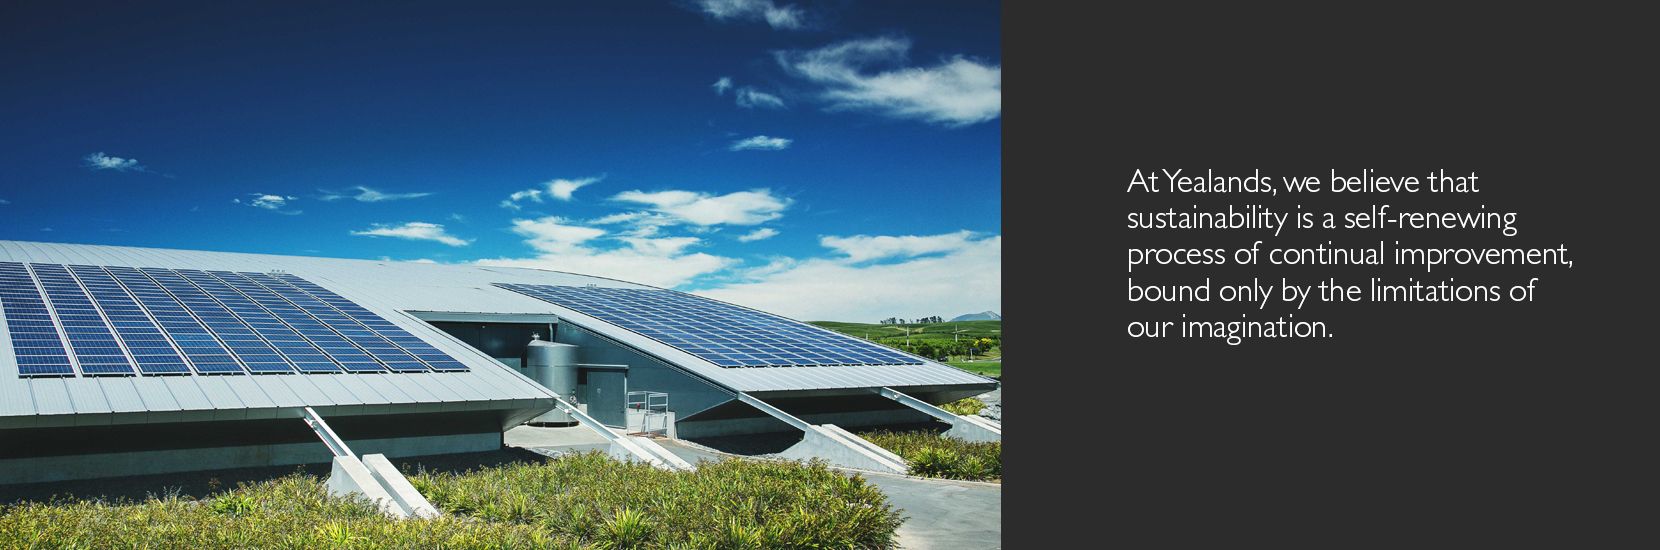 solar panels on low building